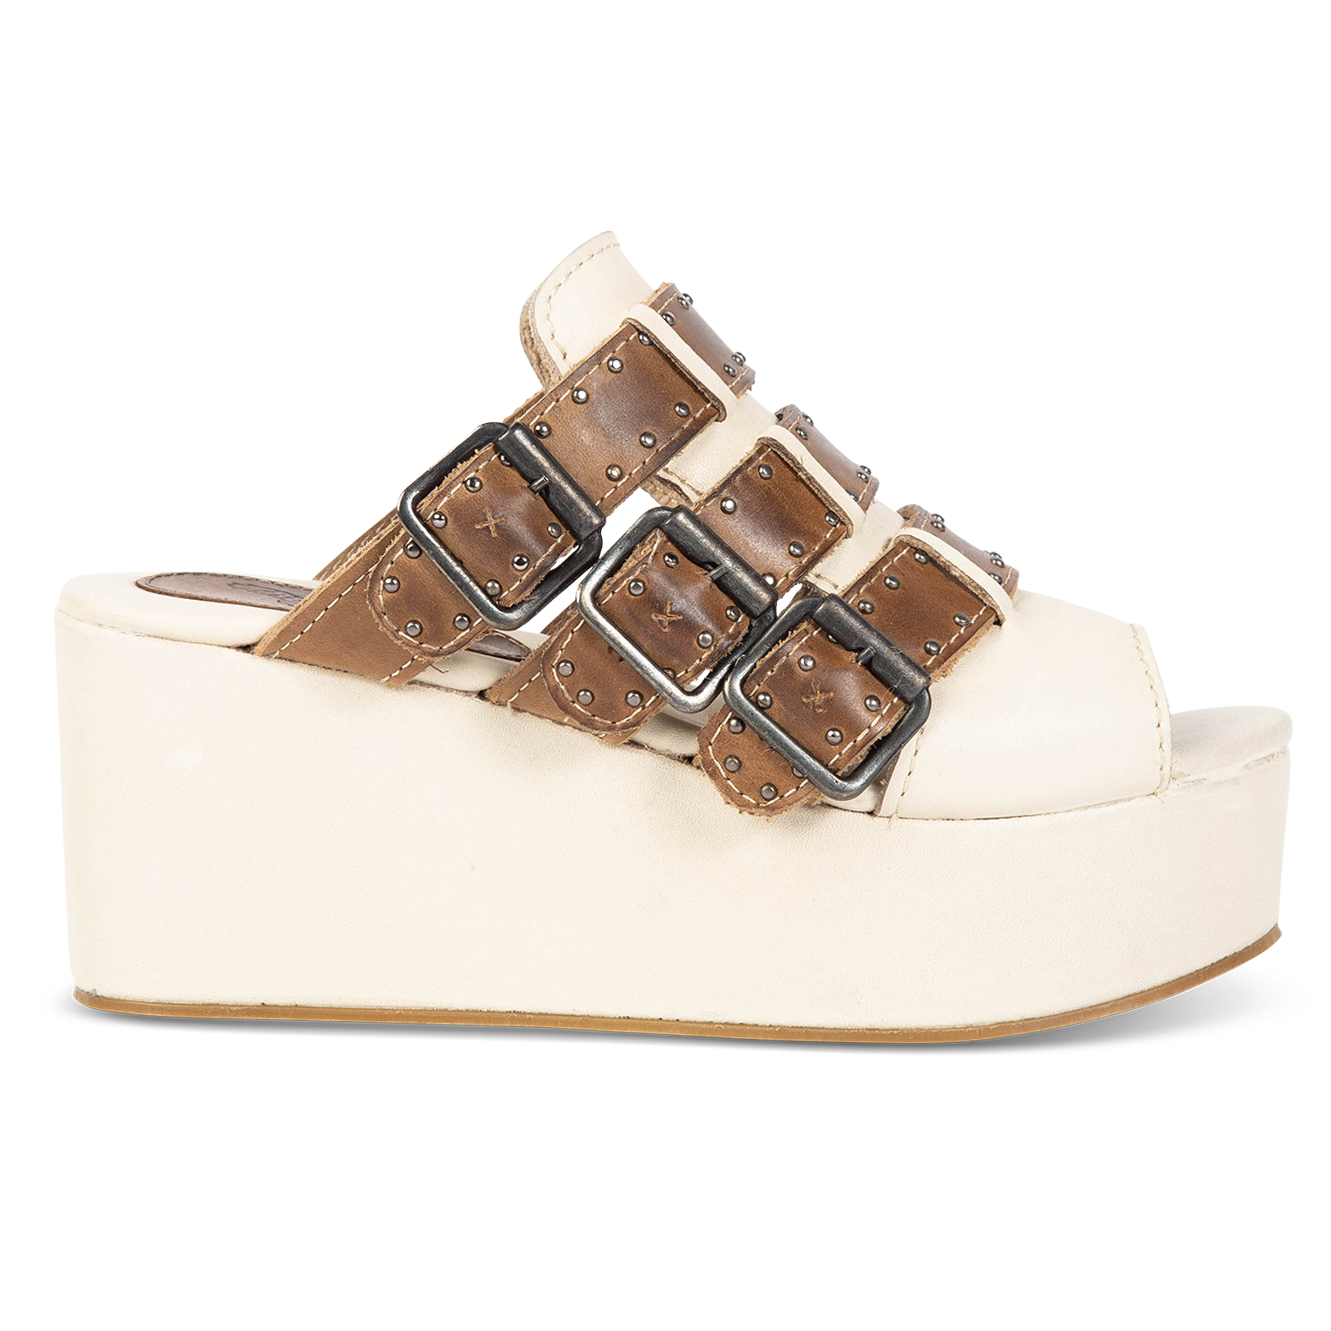 FREEBIRD women's Landi beige slip-on sandal with adjustable straps and platform heel